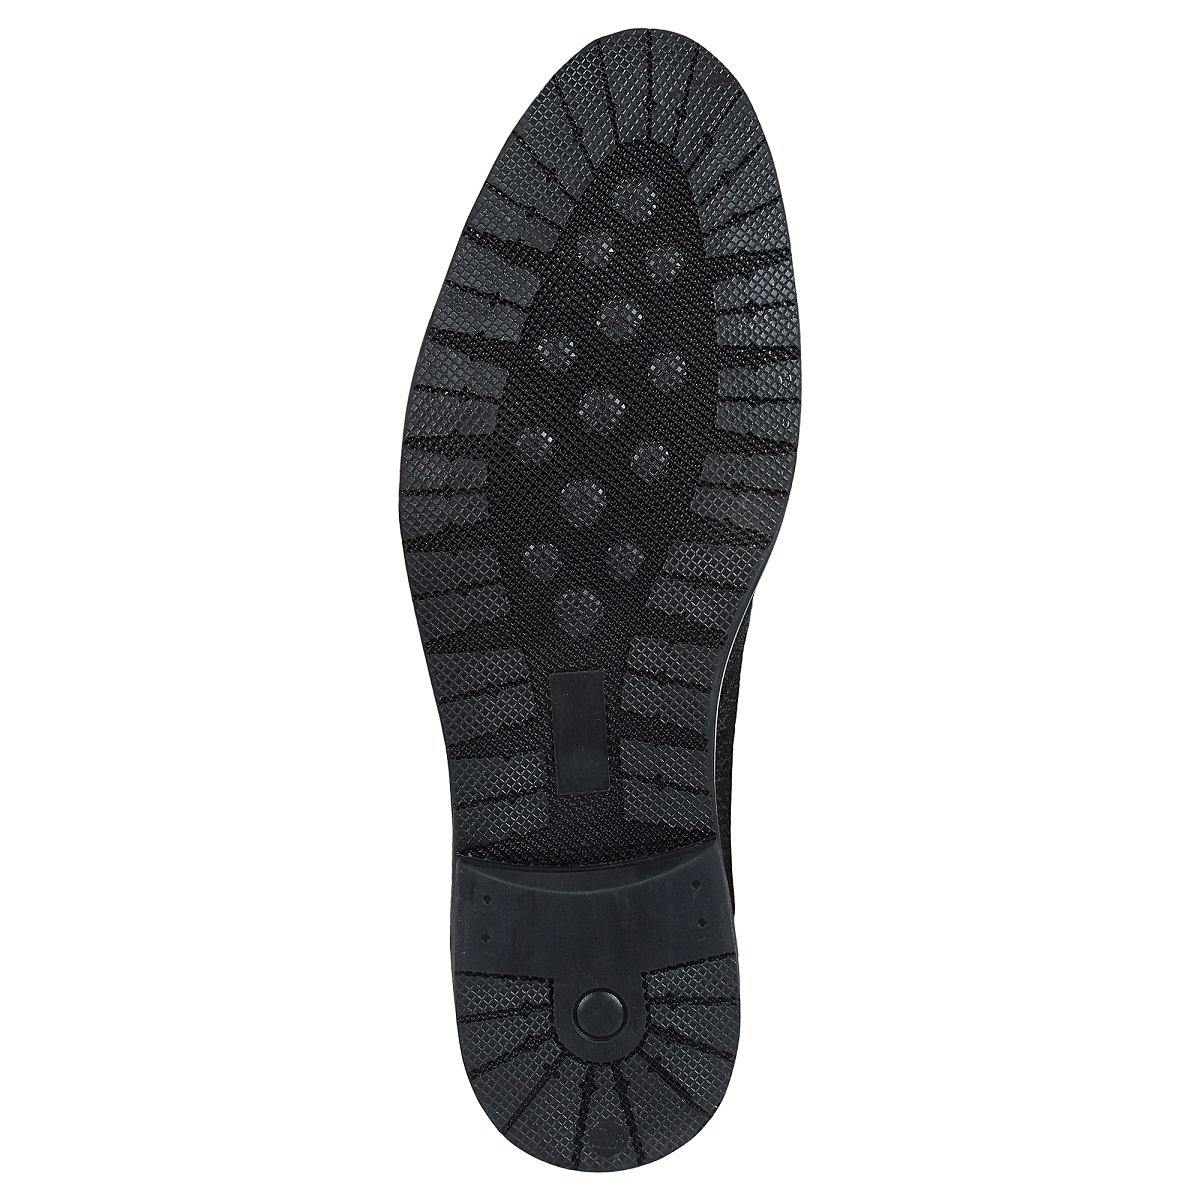 Black Formal Shoes For Men- Minor Defect - SeeandWear